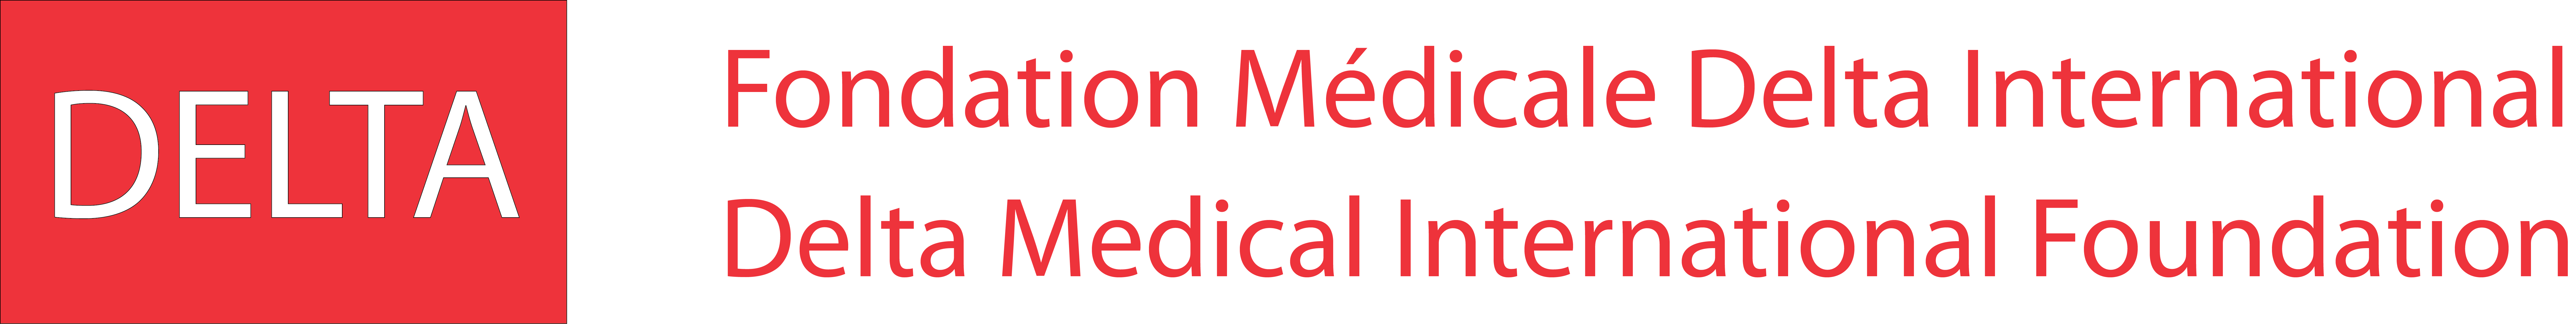 Fondation Médicale Delta Internationale